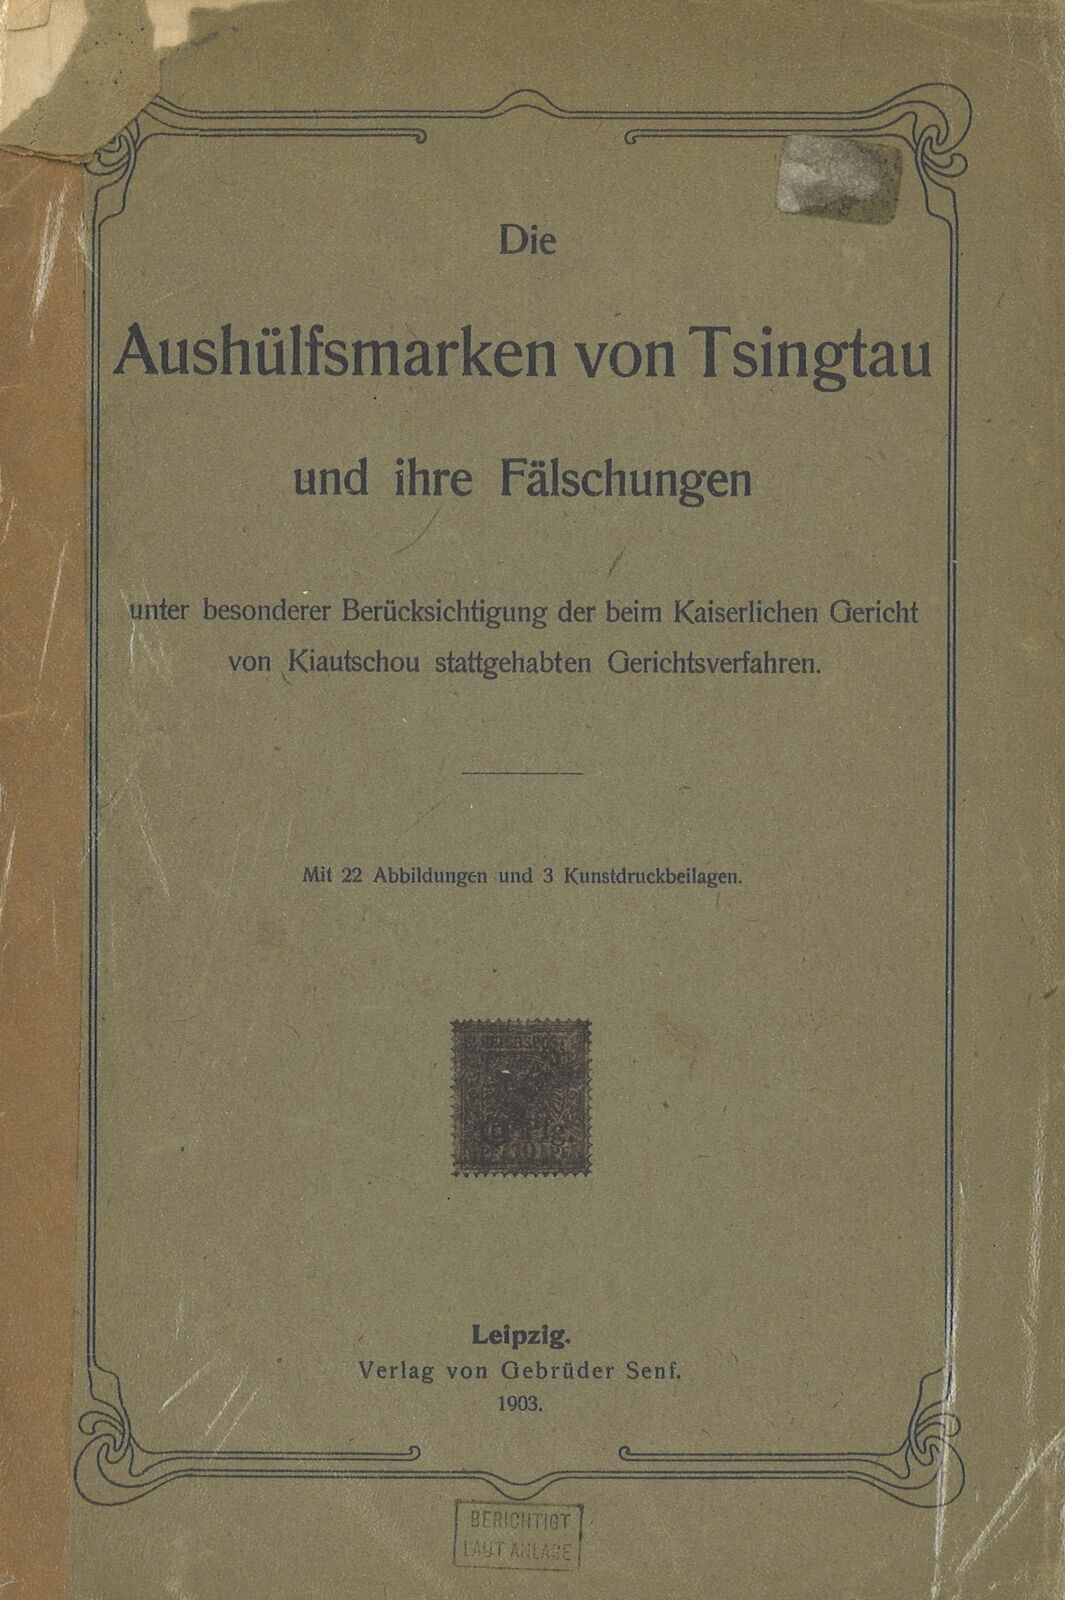 The aushülfsmarken of TSINGTAU and its counterfeits (Leipzig 190